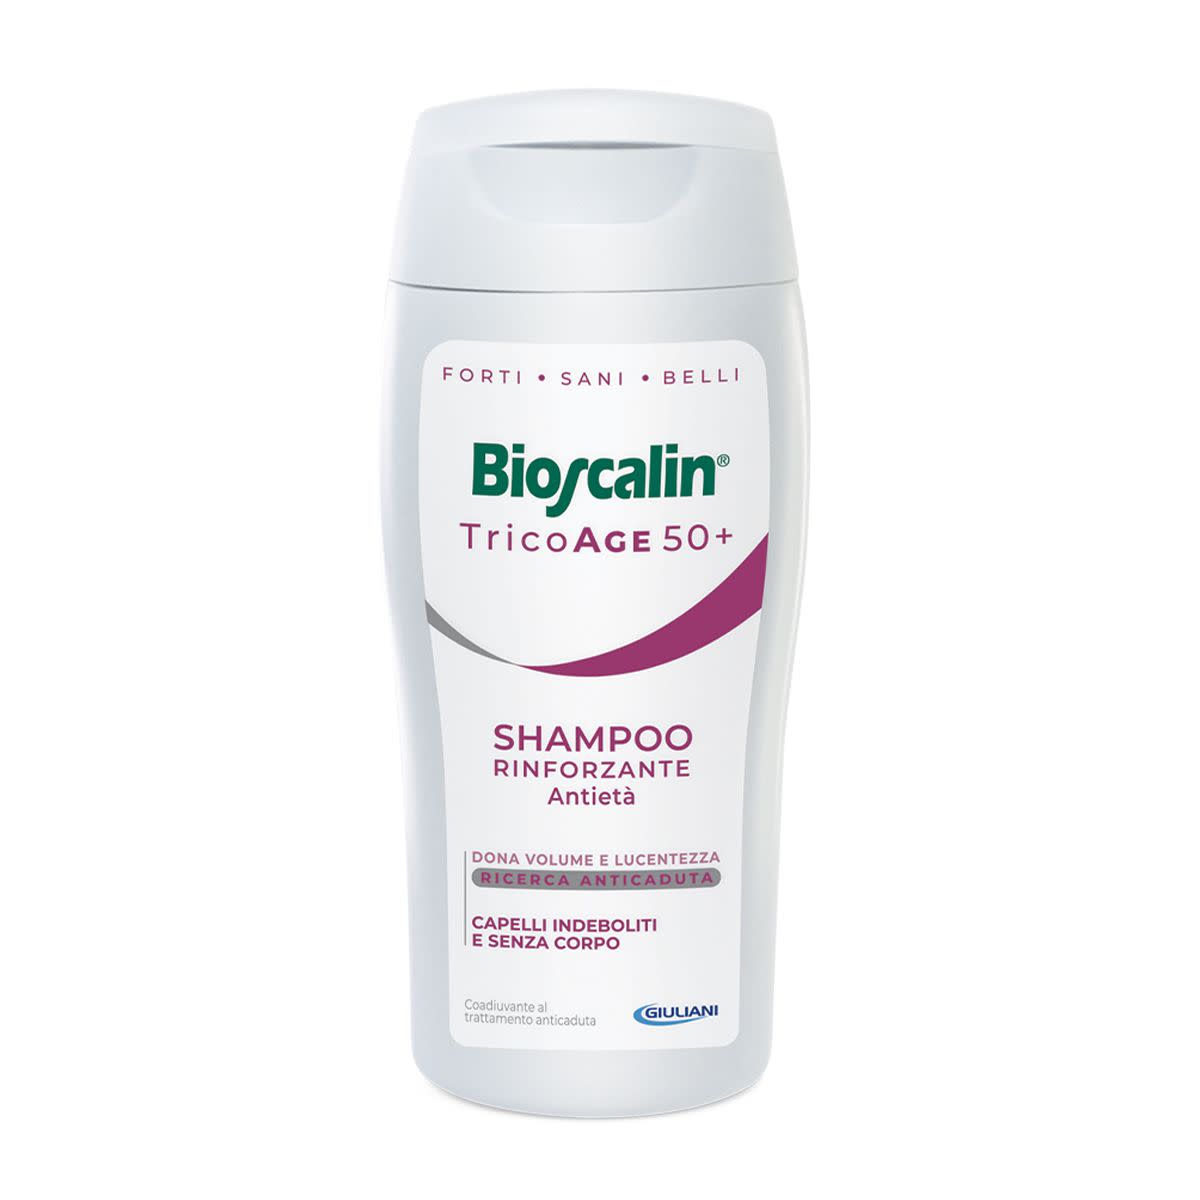 923785620 - Bioscalin Tricoage 50+ Shampoo 200ml - 7864490_2.jpg